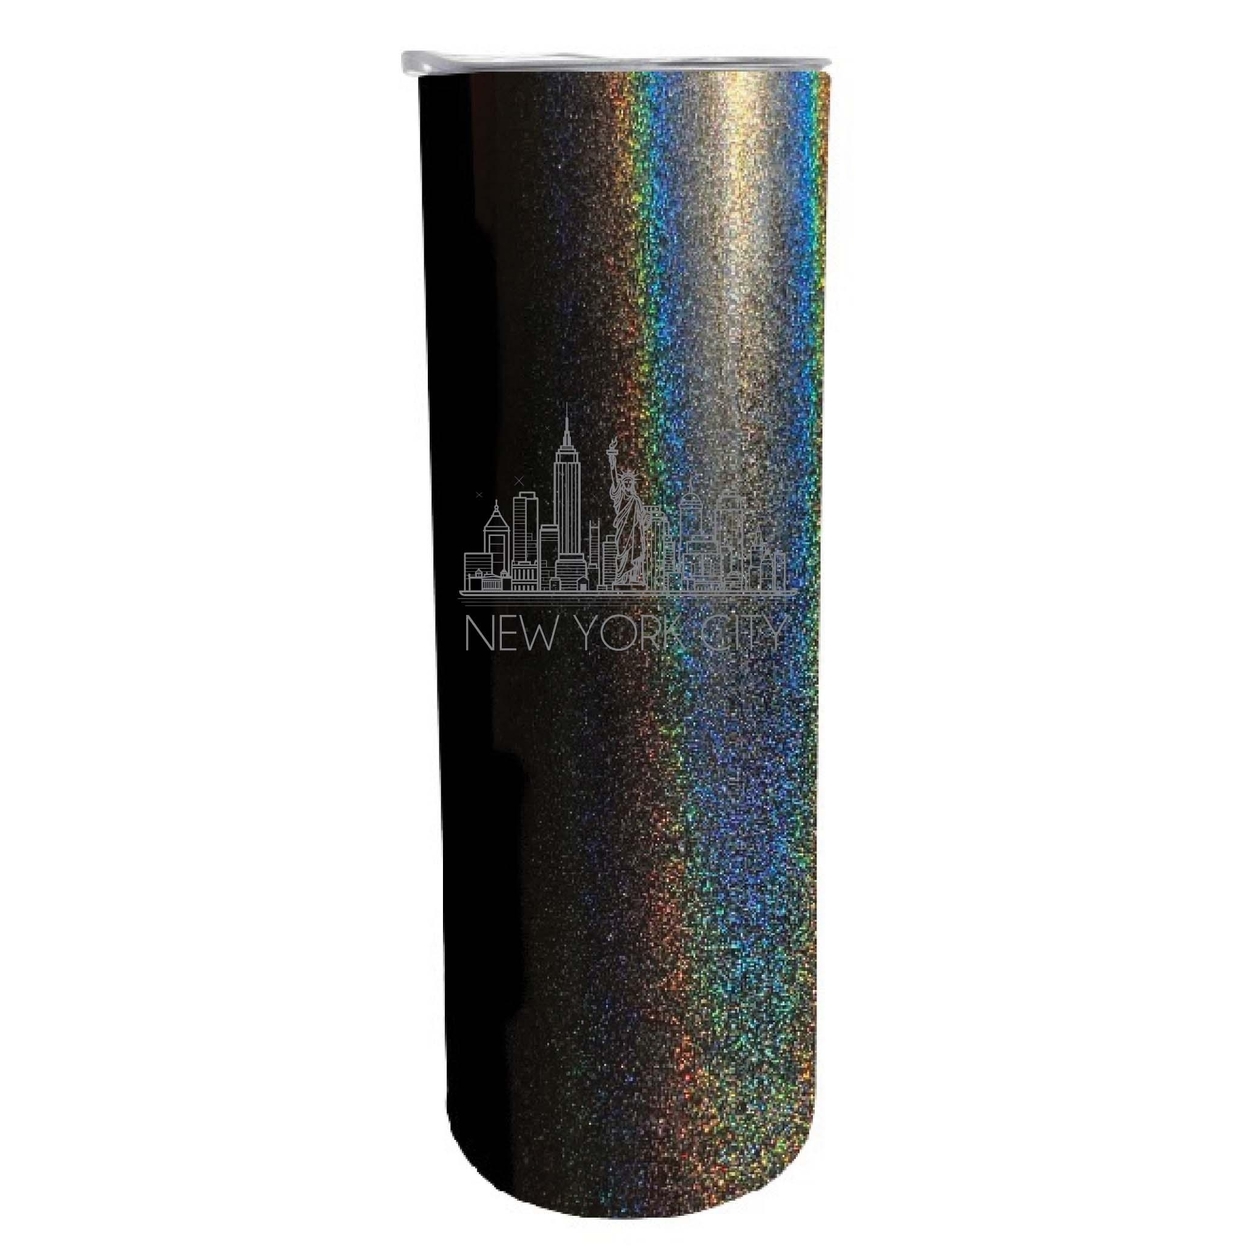 New York City Souvenir 20 Oz Engraved Insulated Skinny Tumbler Glitter - Black Glitter,,Single Unit